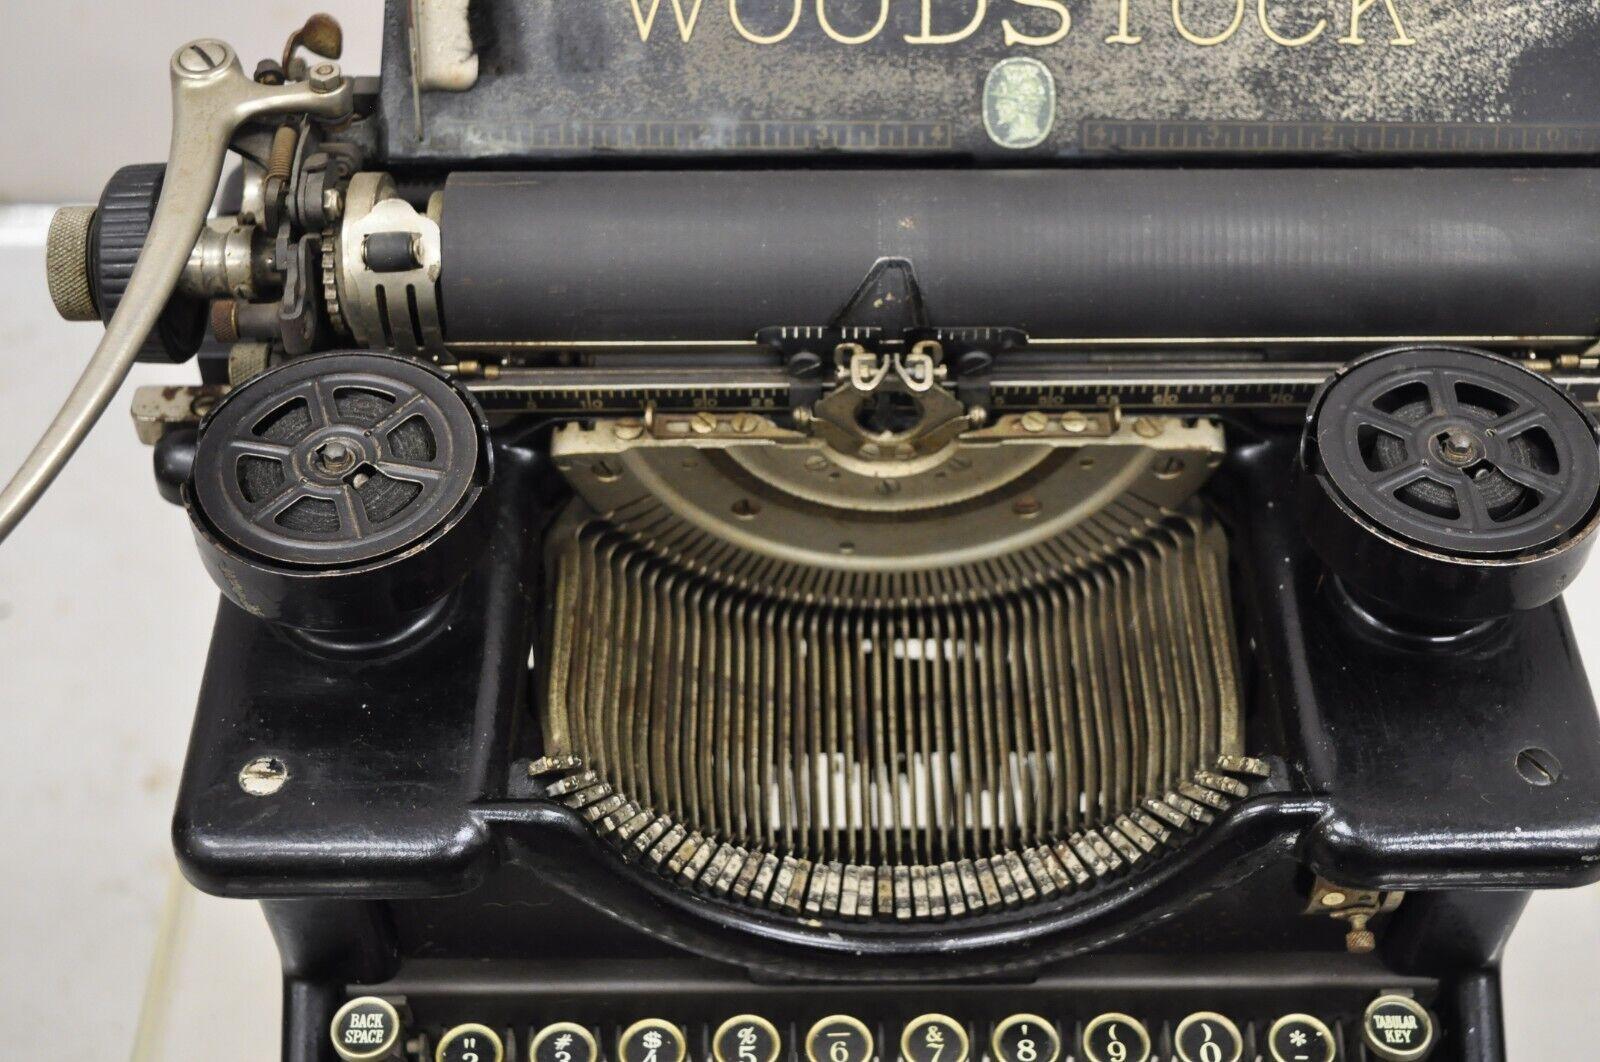 Metal Antique Art Deco Woodstock Manual Typewriter For Sale